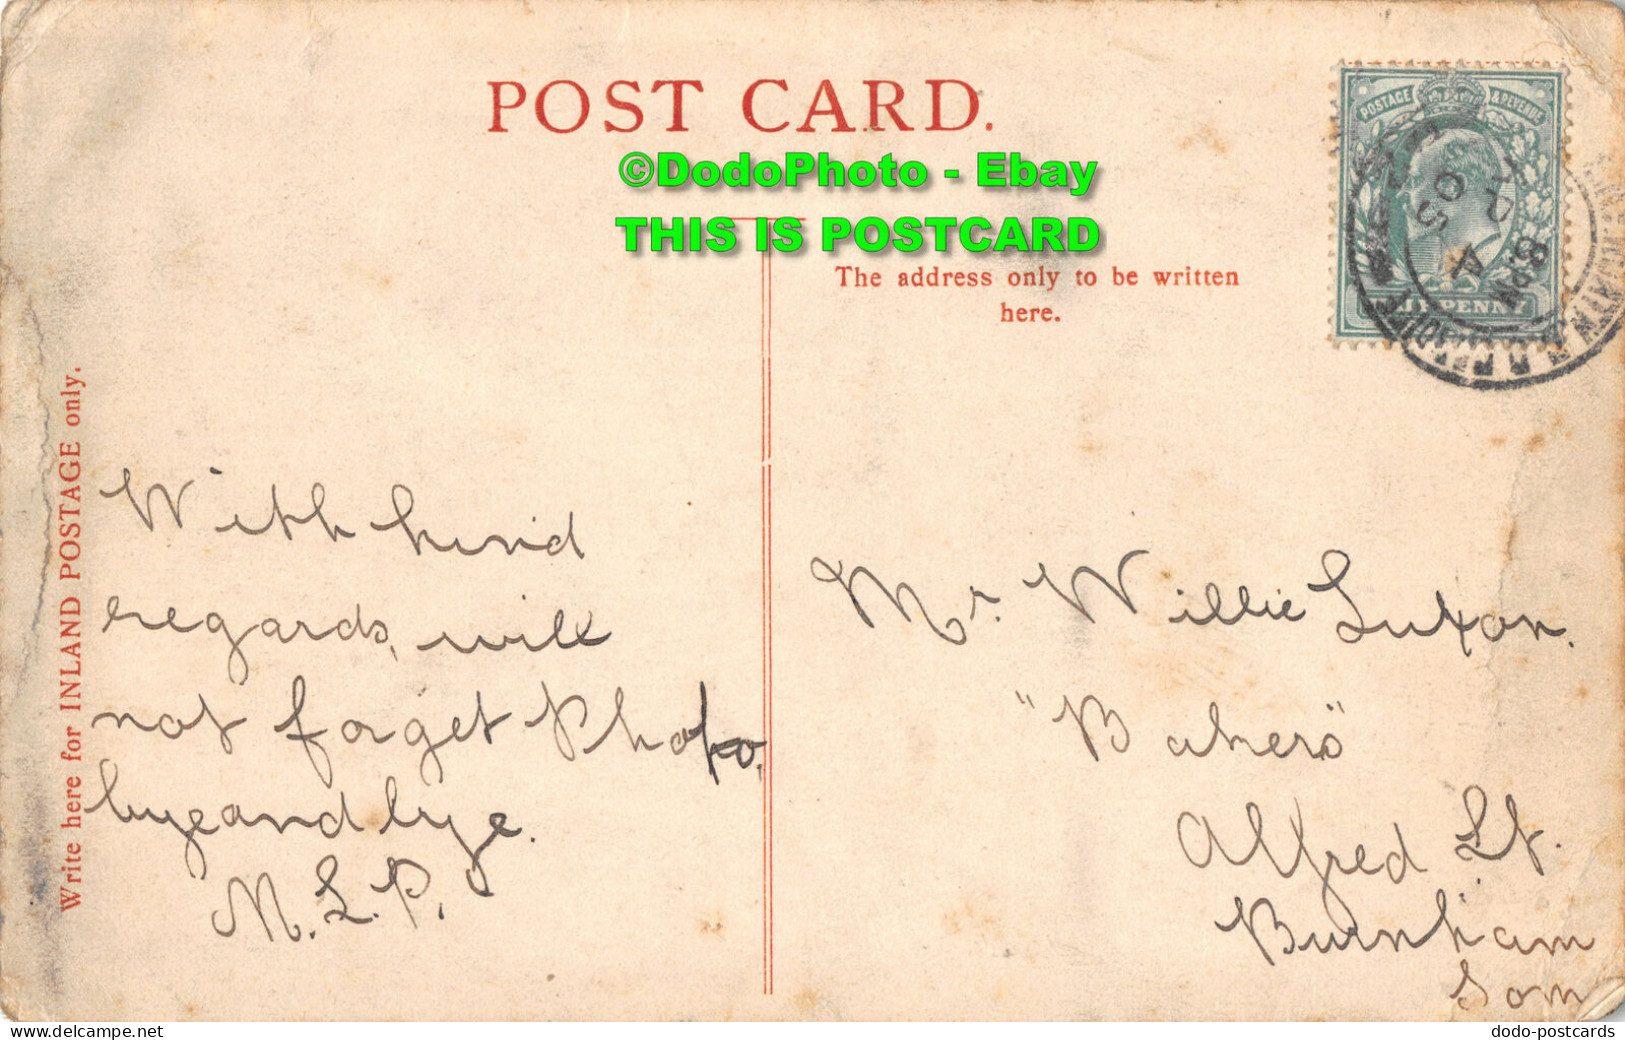 R355849 Sandringham. York Cottage. Postcard. 1905 - Monde